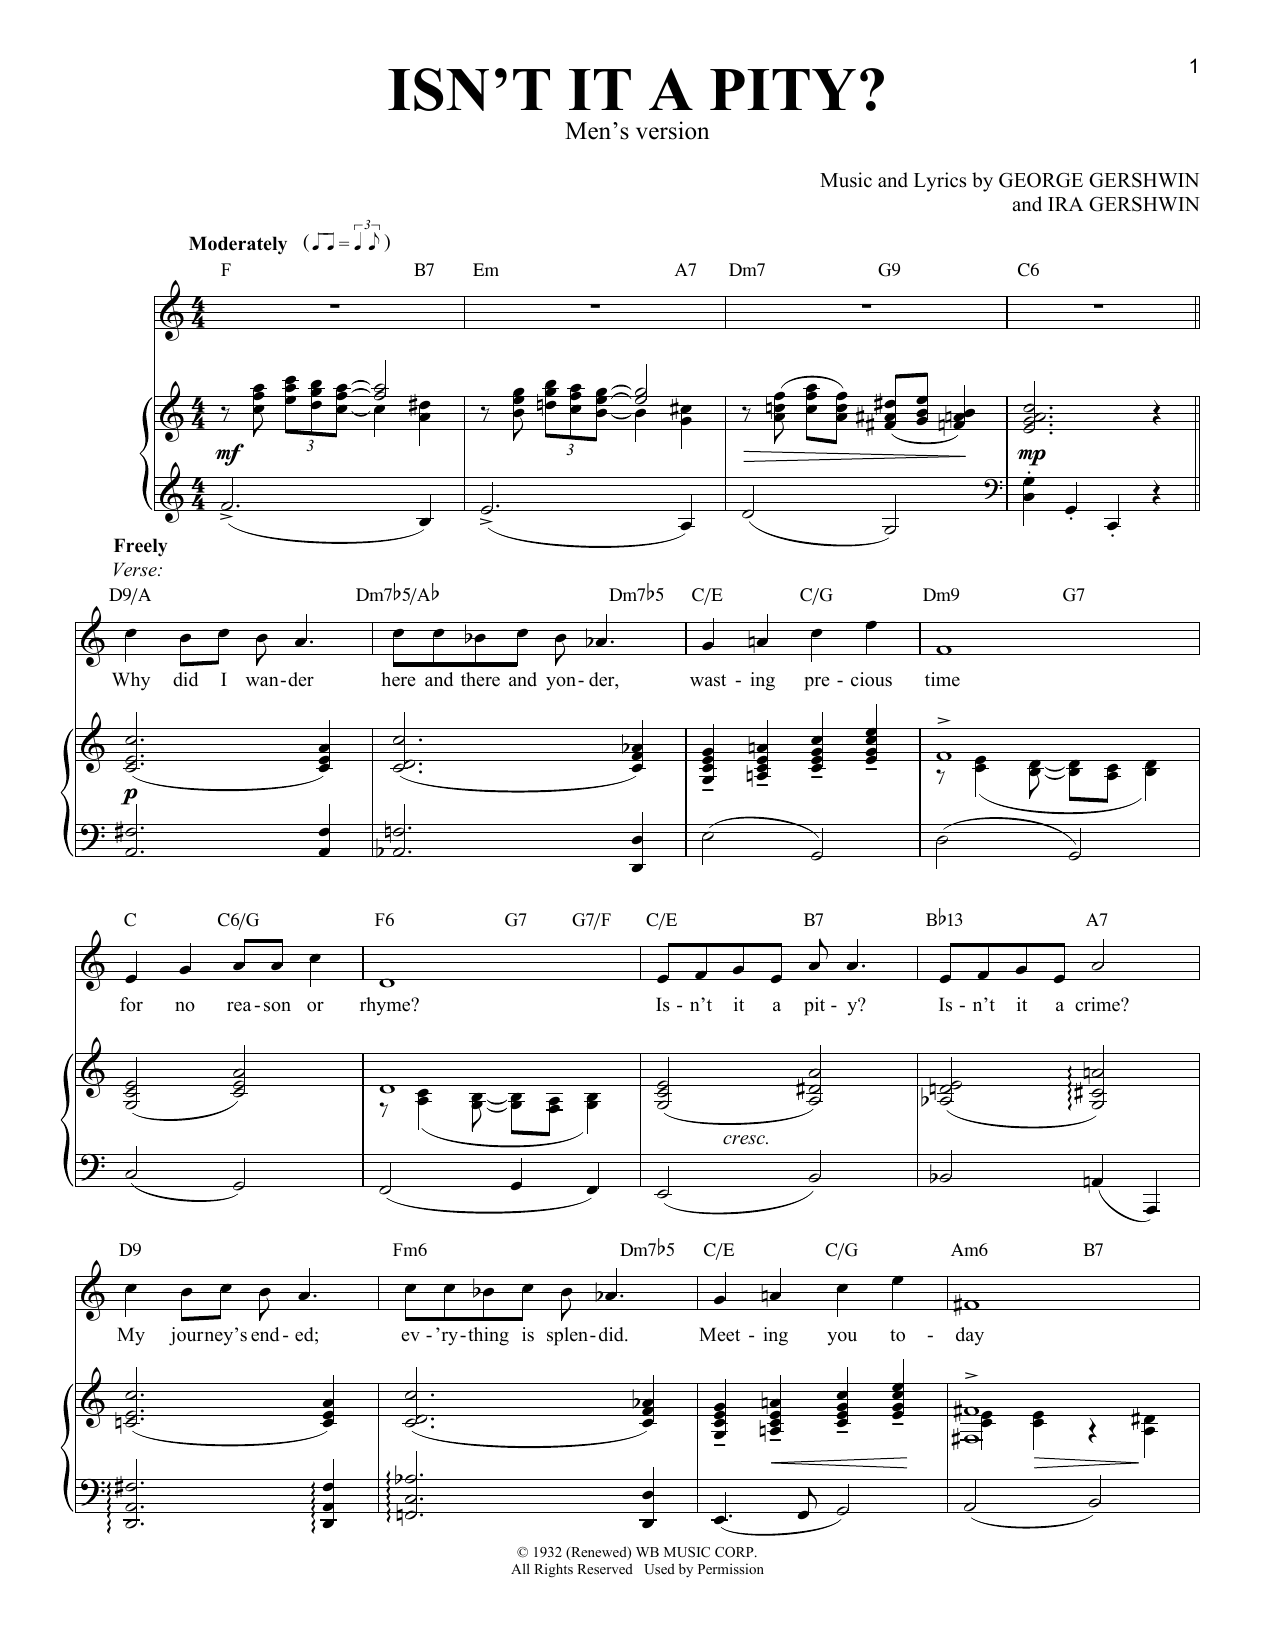 Download George Gershwin Isn't It A Pity? [Men's version] Sheet Music